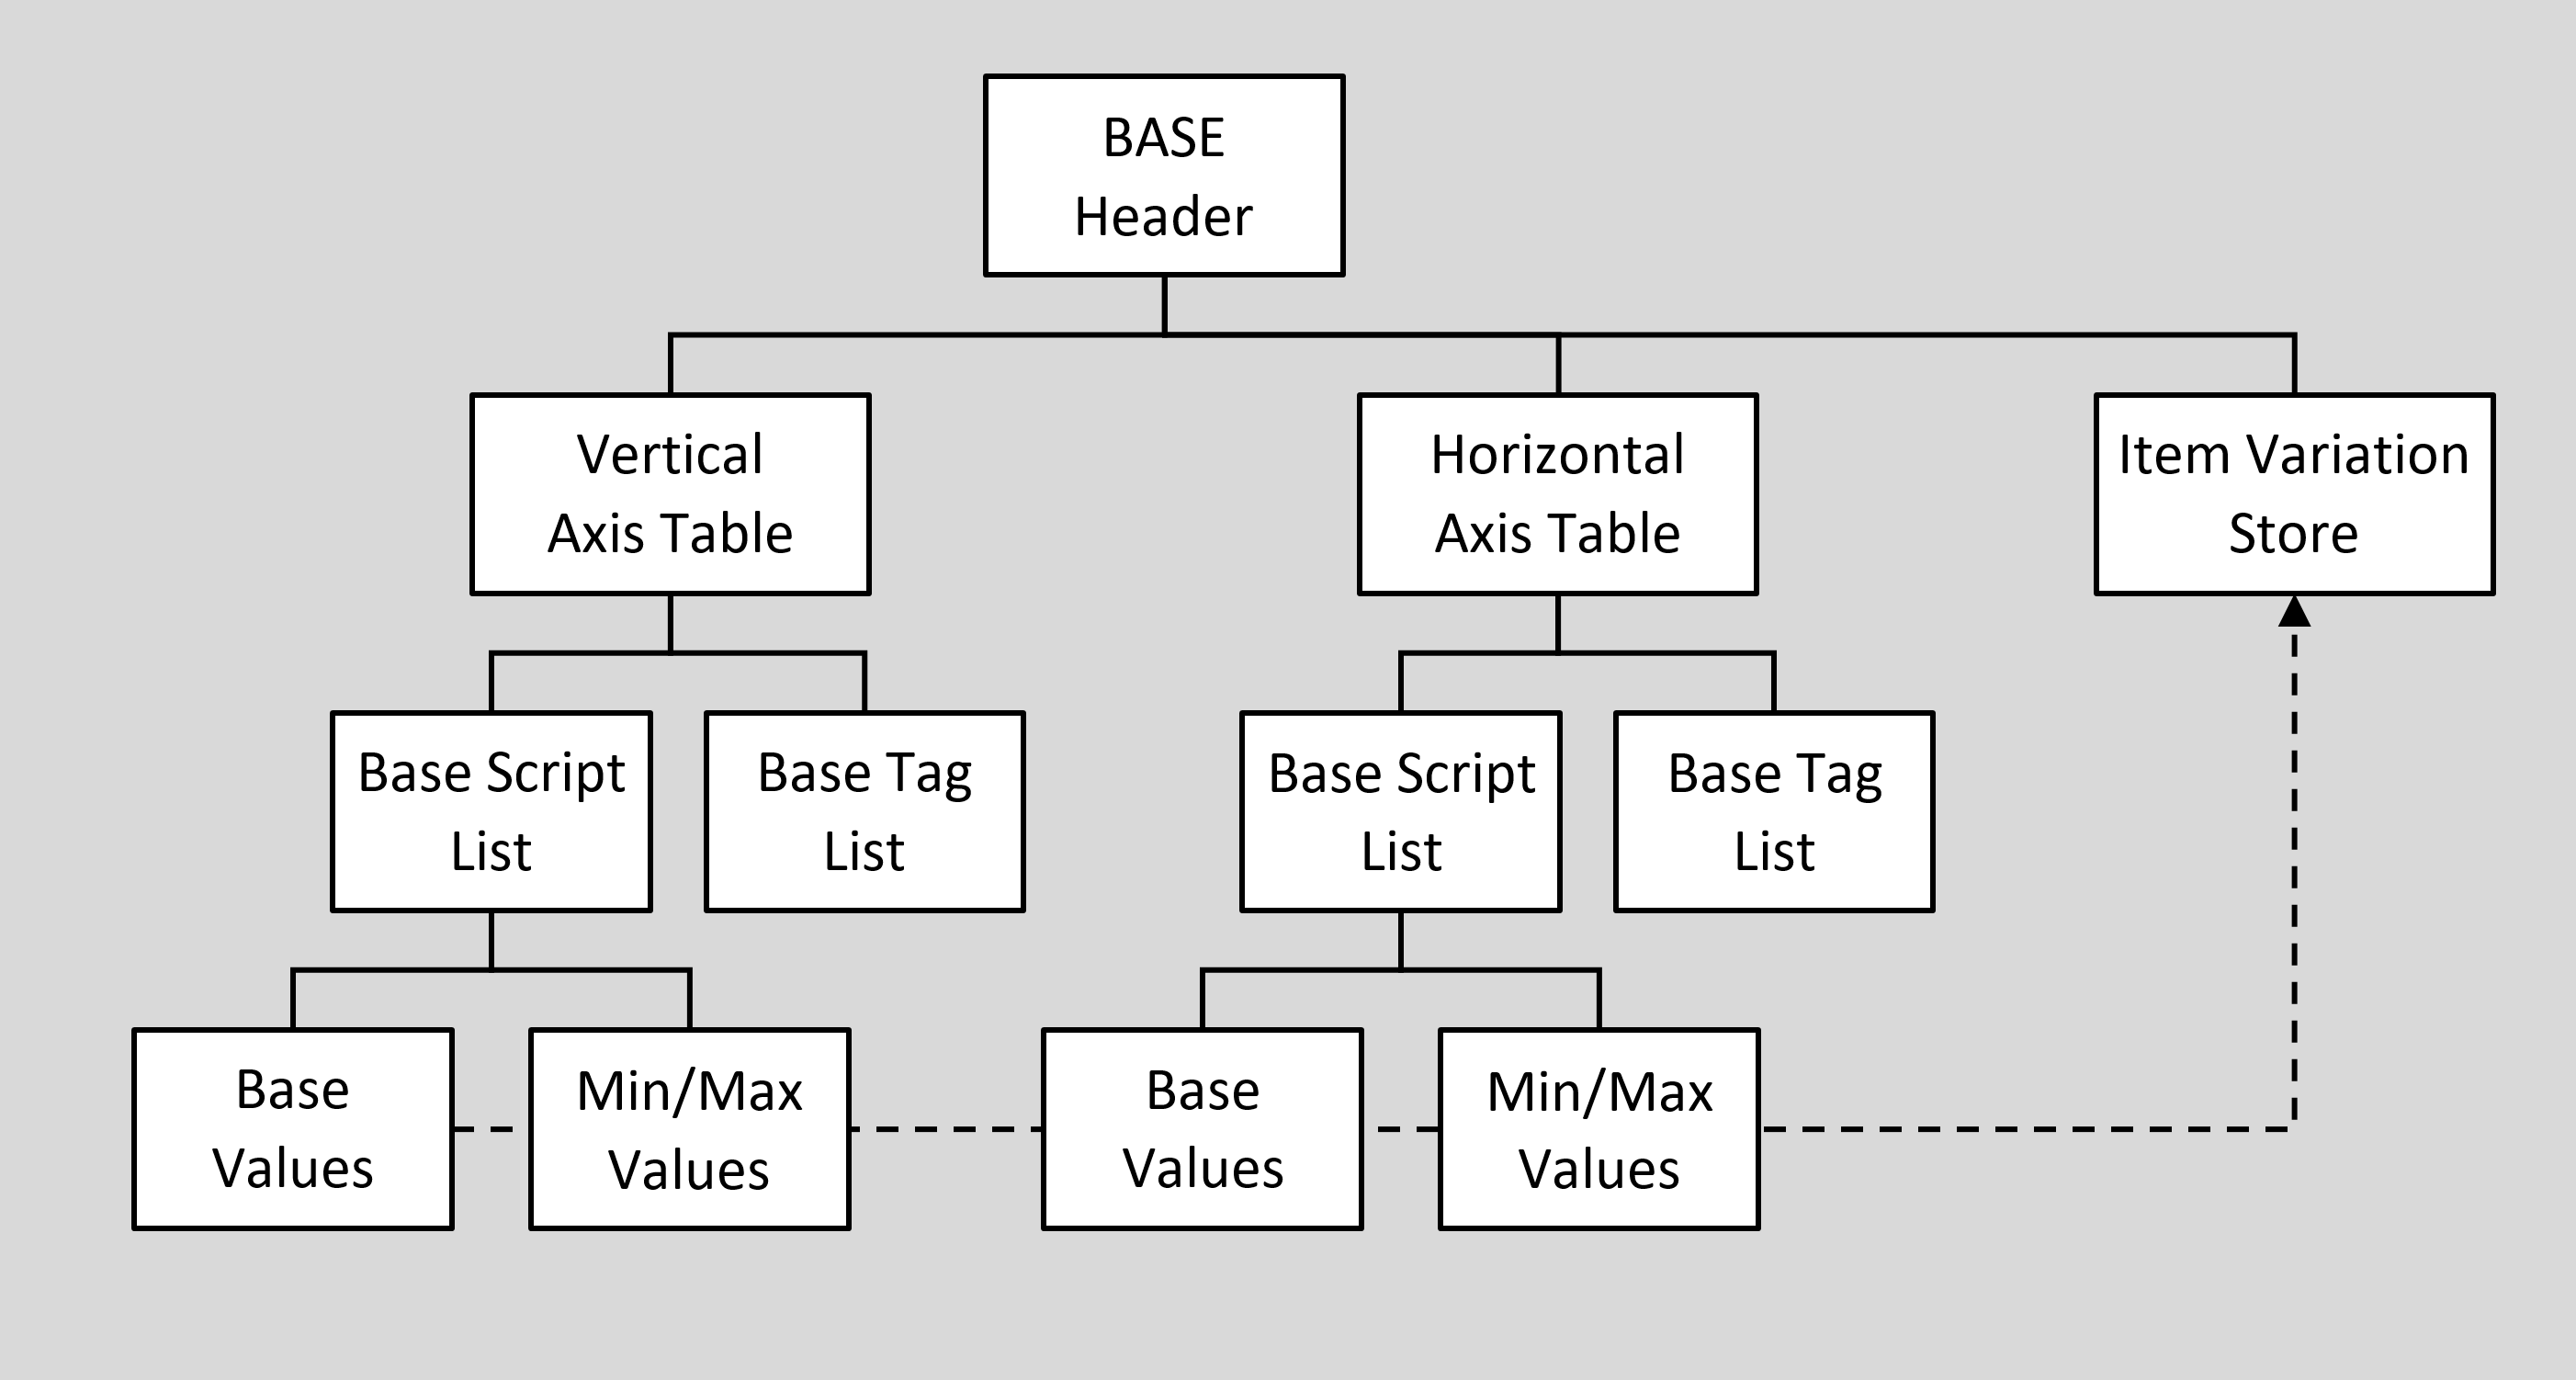 BASE table high-level organization